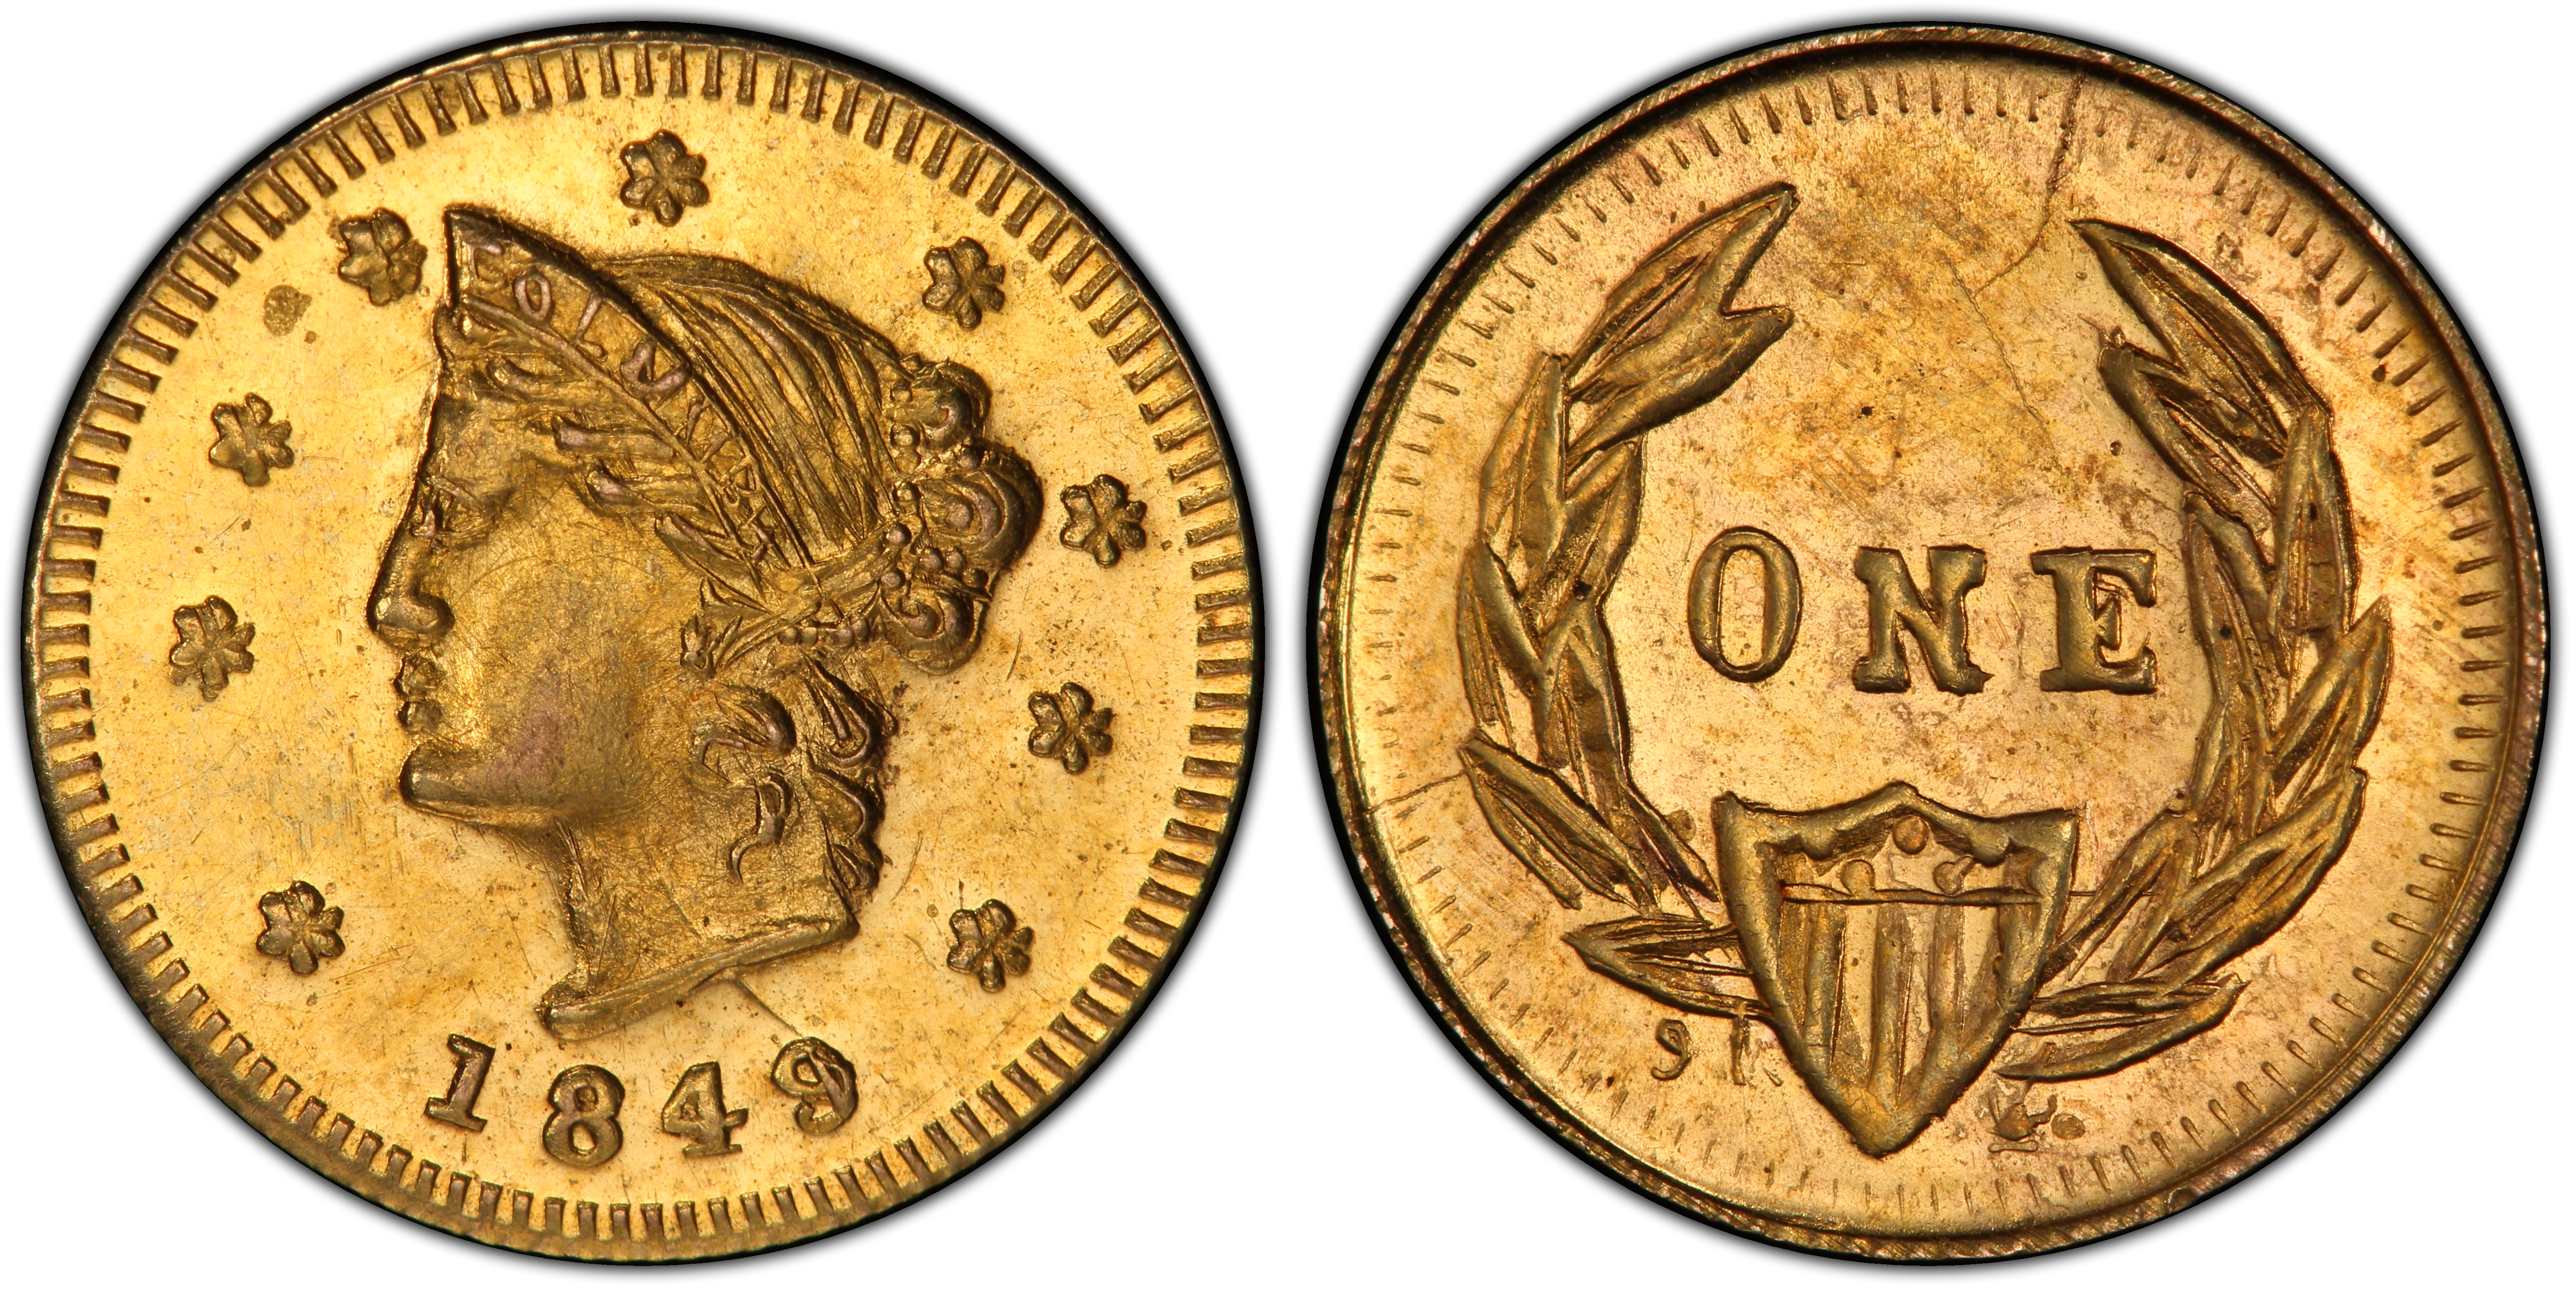 (1849) tkn $1 greene